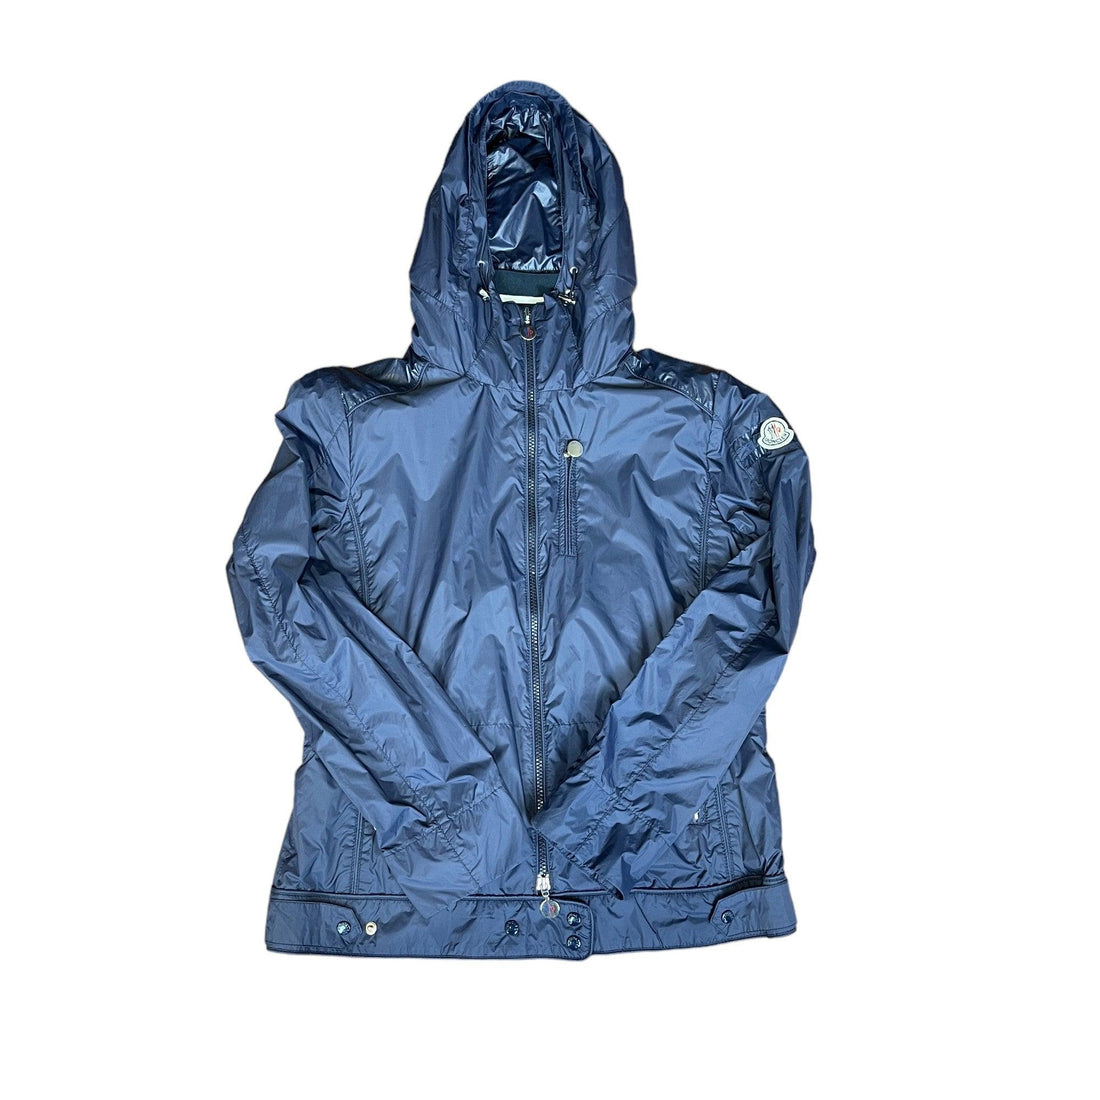 Vintage Navy Blue Moncler Jacket - Medium - The Streetwear Studio